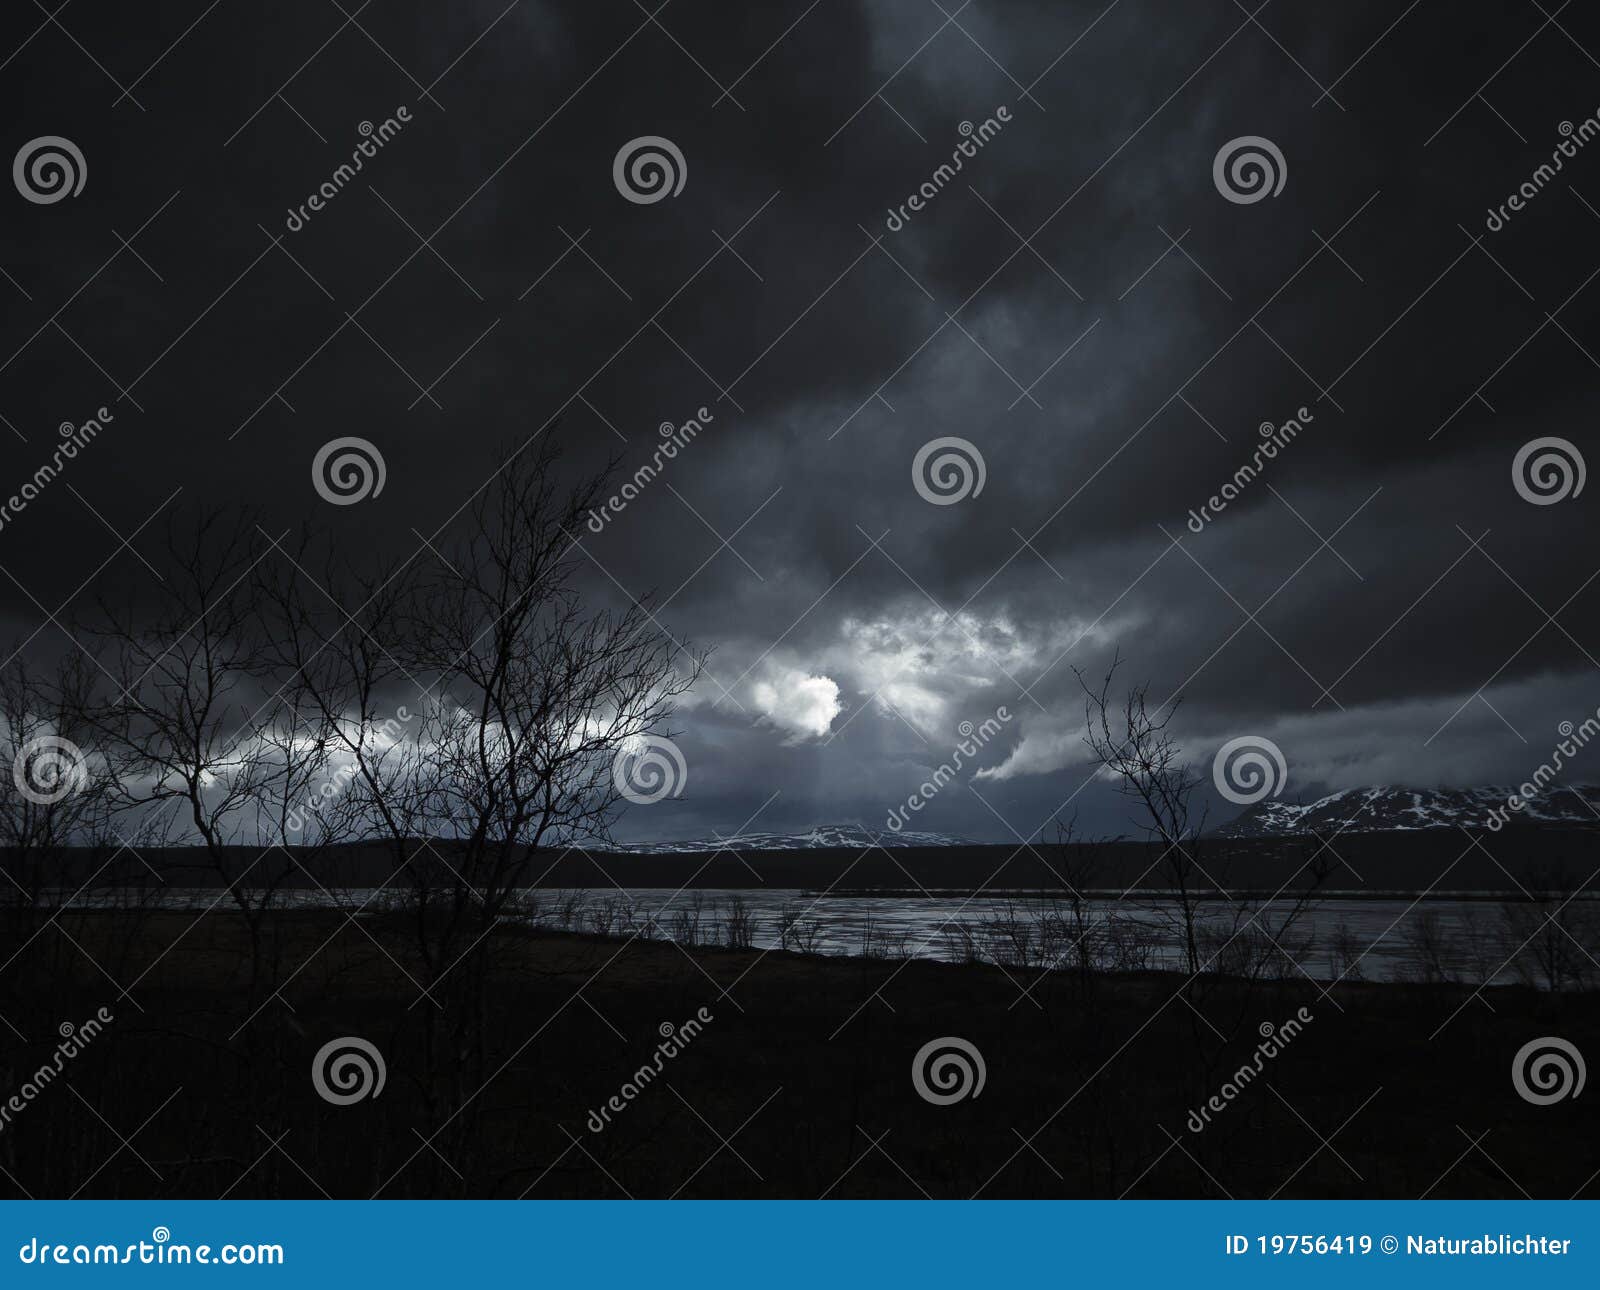 dark cloudscape at night